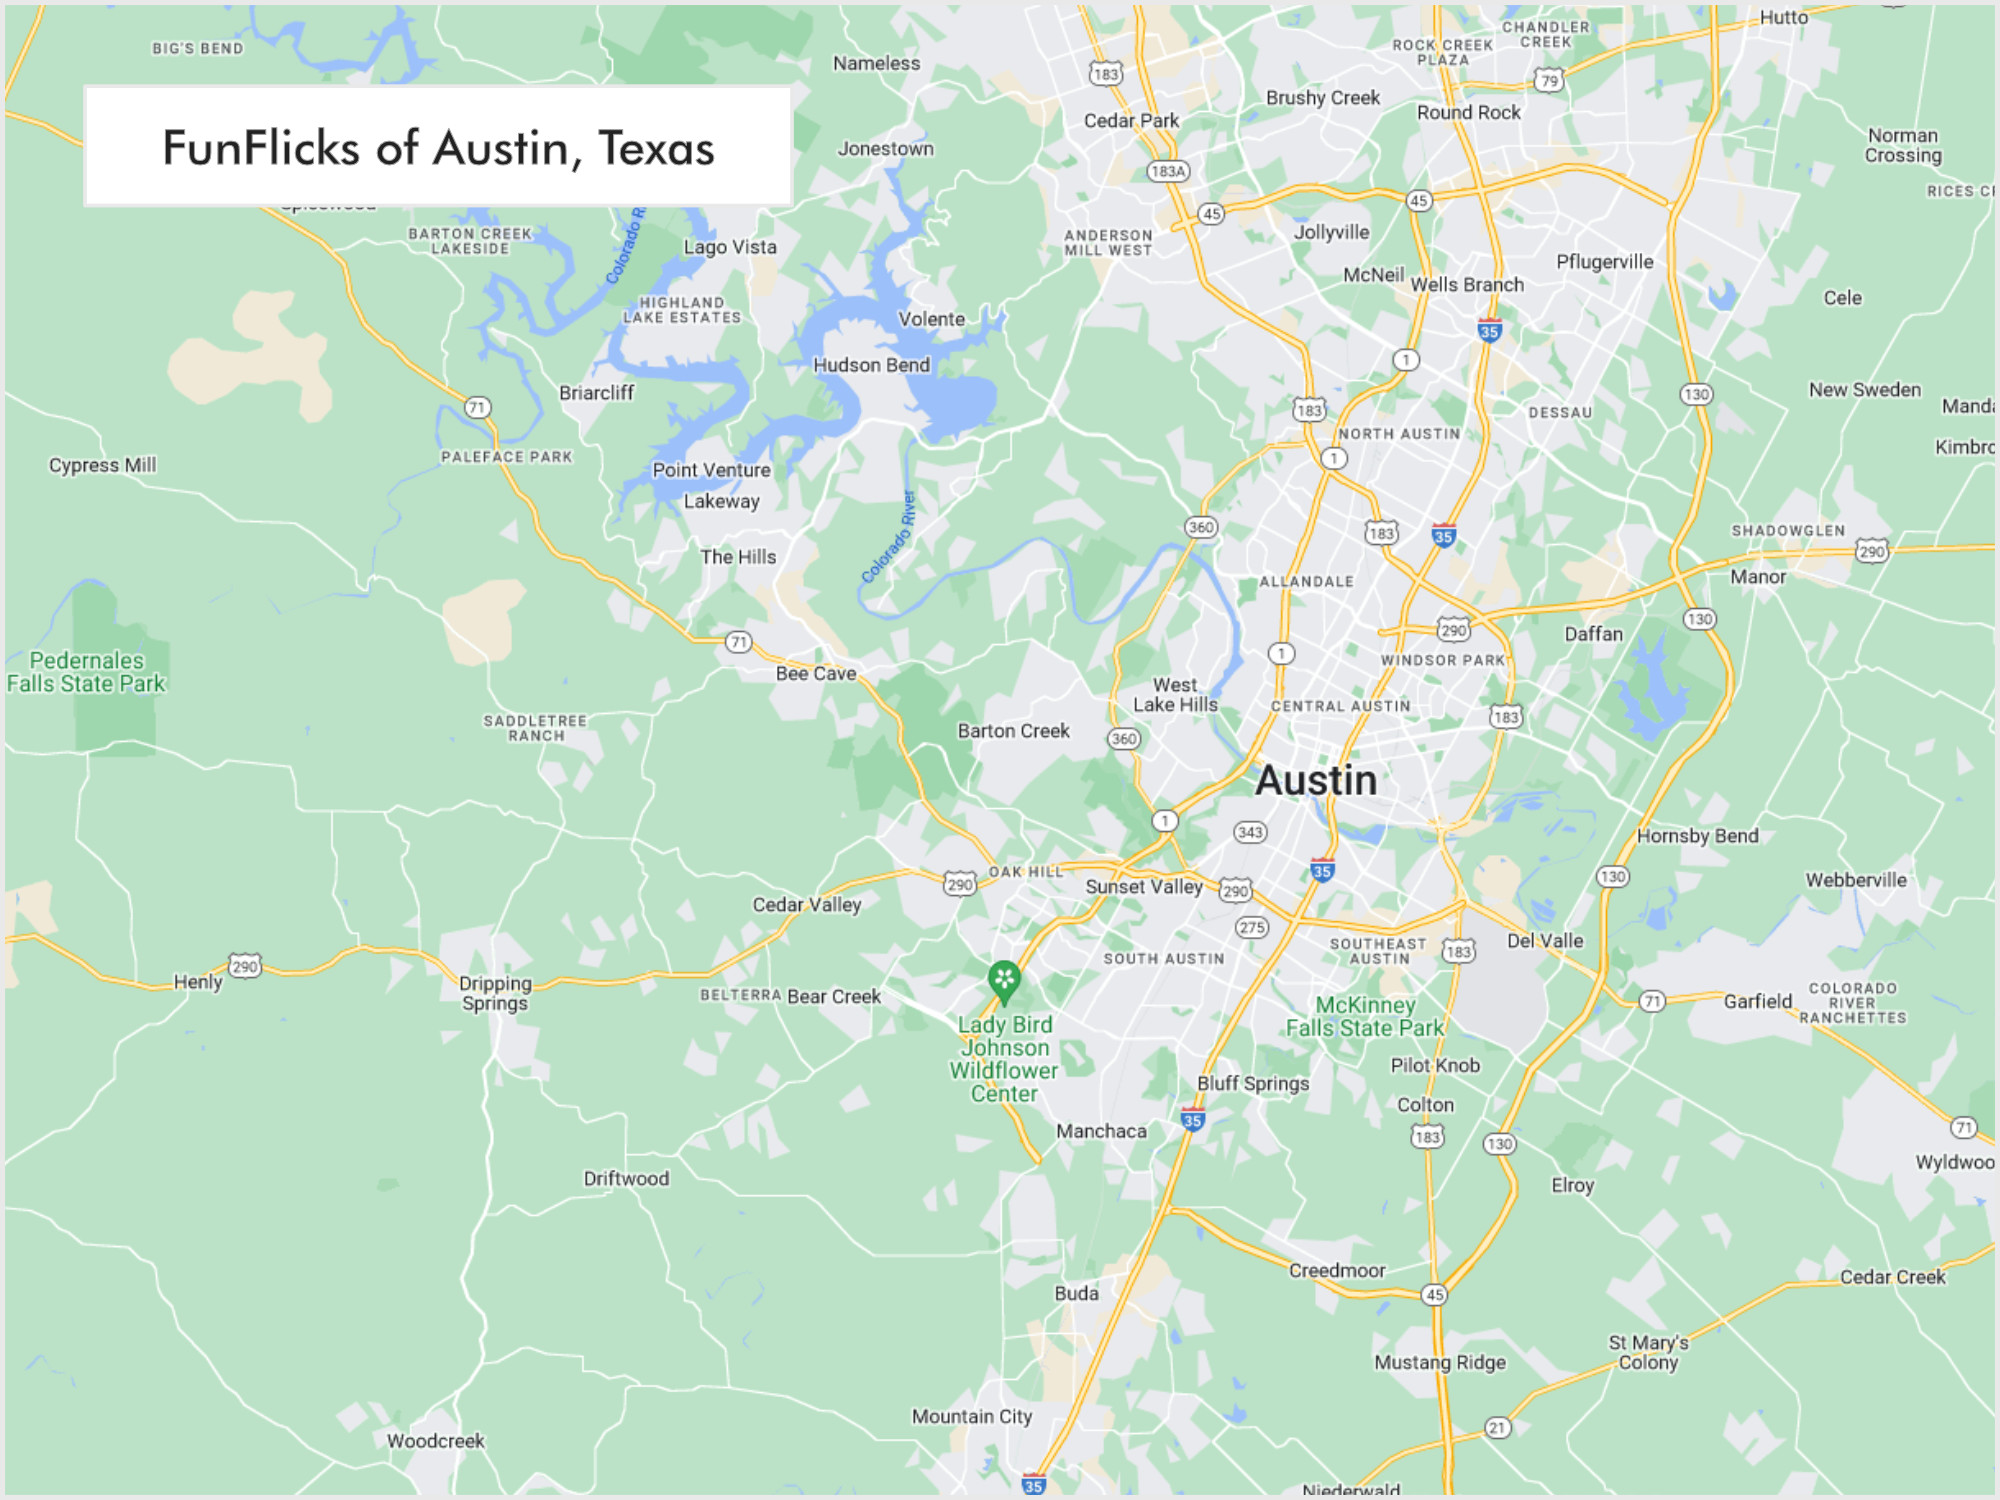 FunFlicks® Austin Texas territory map